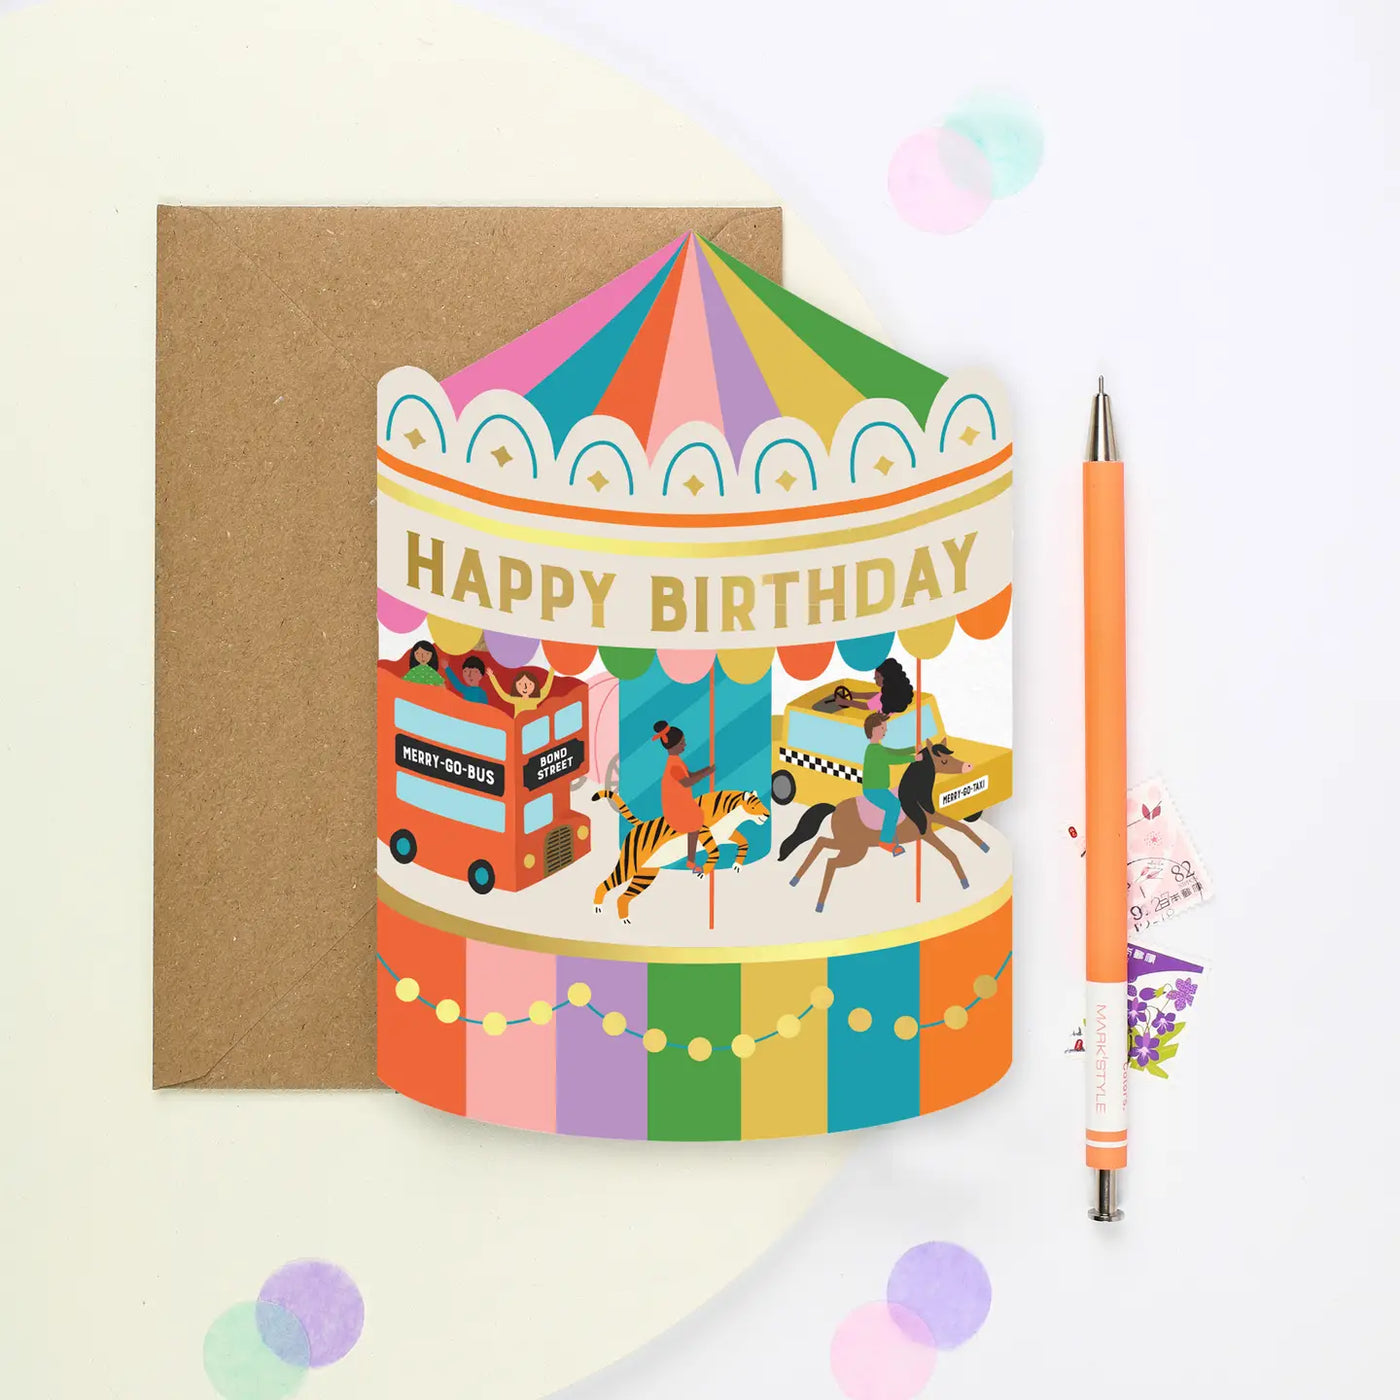 Fairground Carousel Birthday Card - Greeting Cards - Edie & Eve